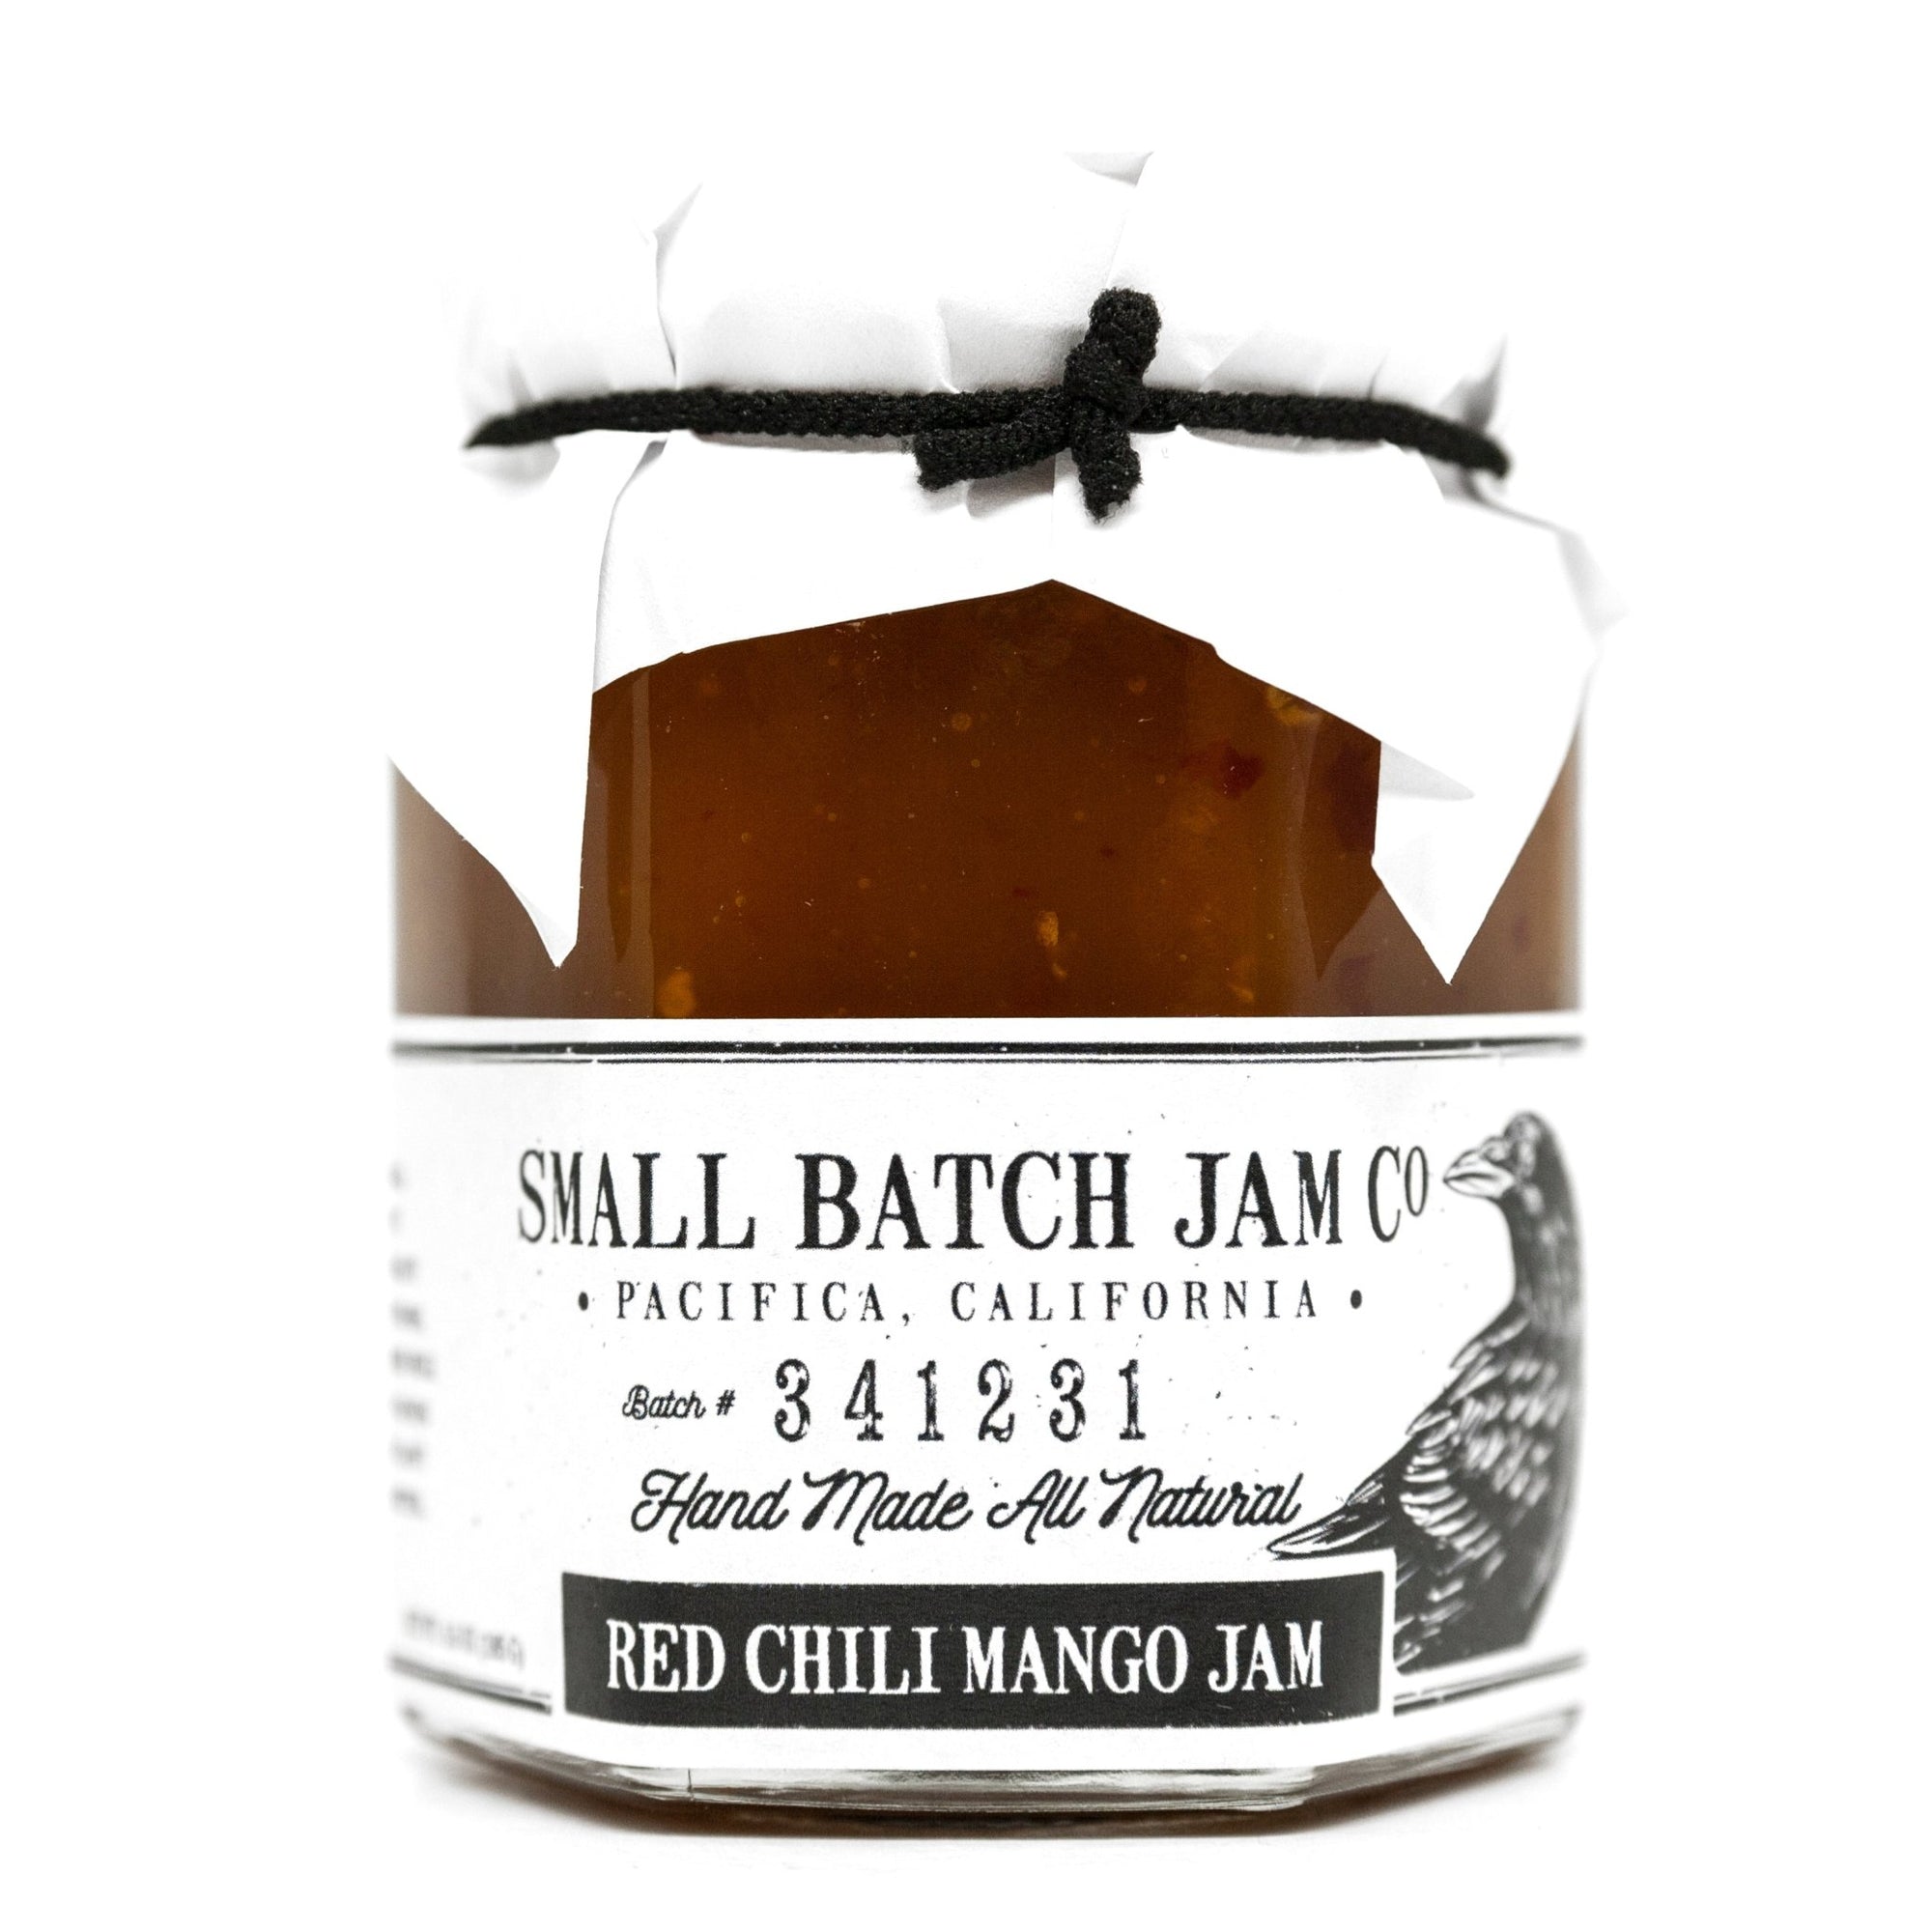 Red Chili Mango Jam - Small Batch Jam Co